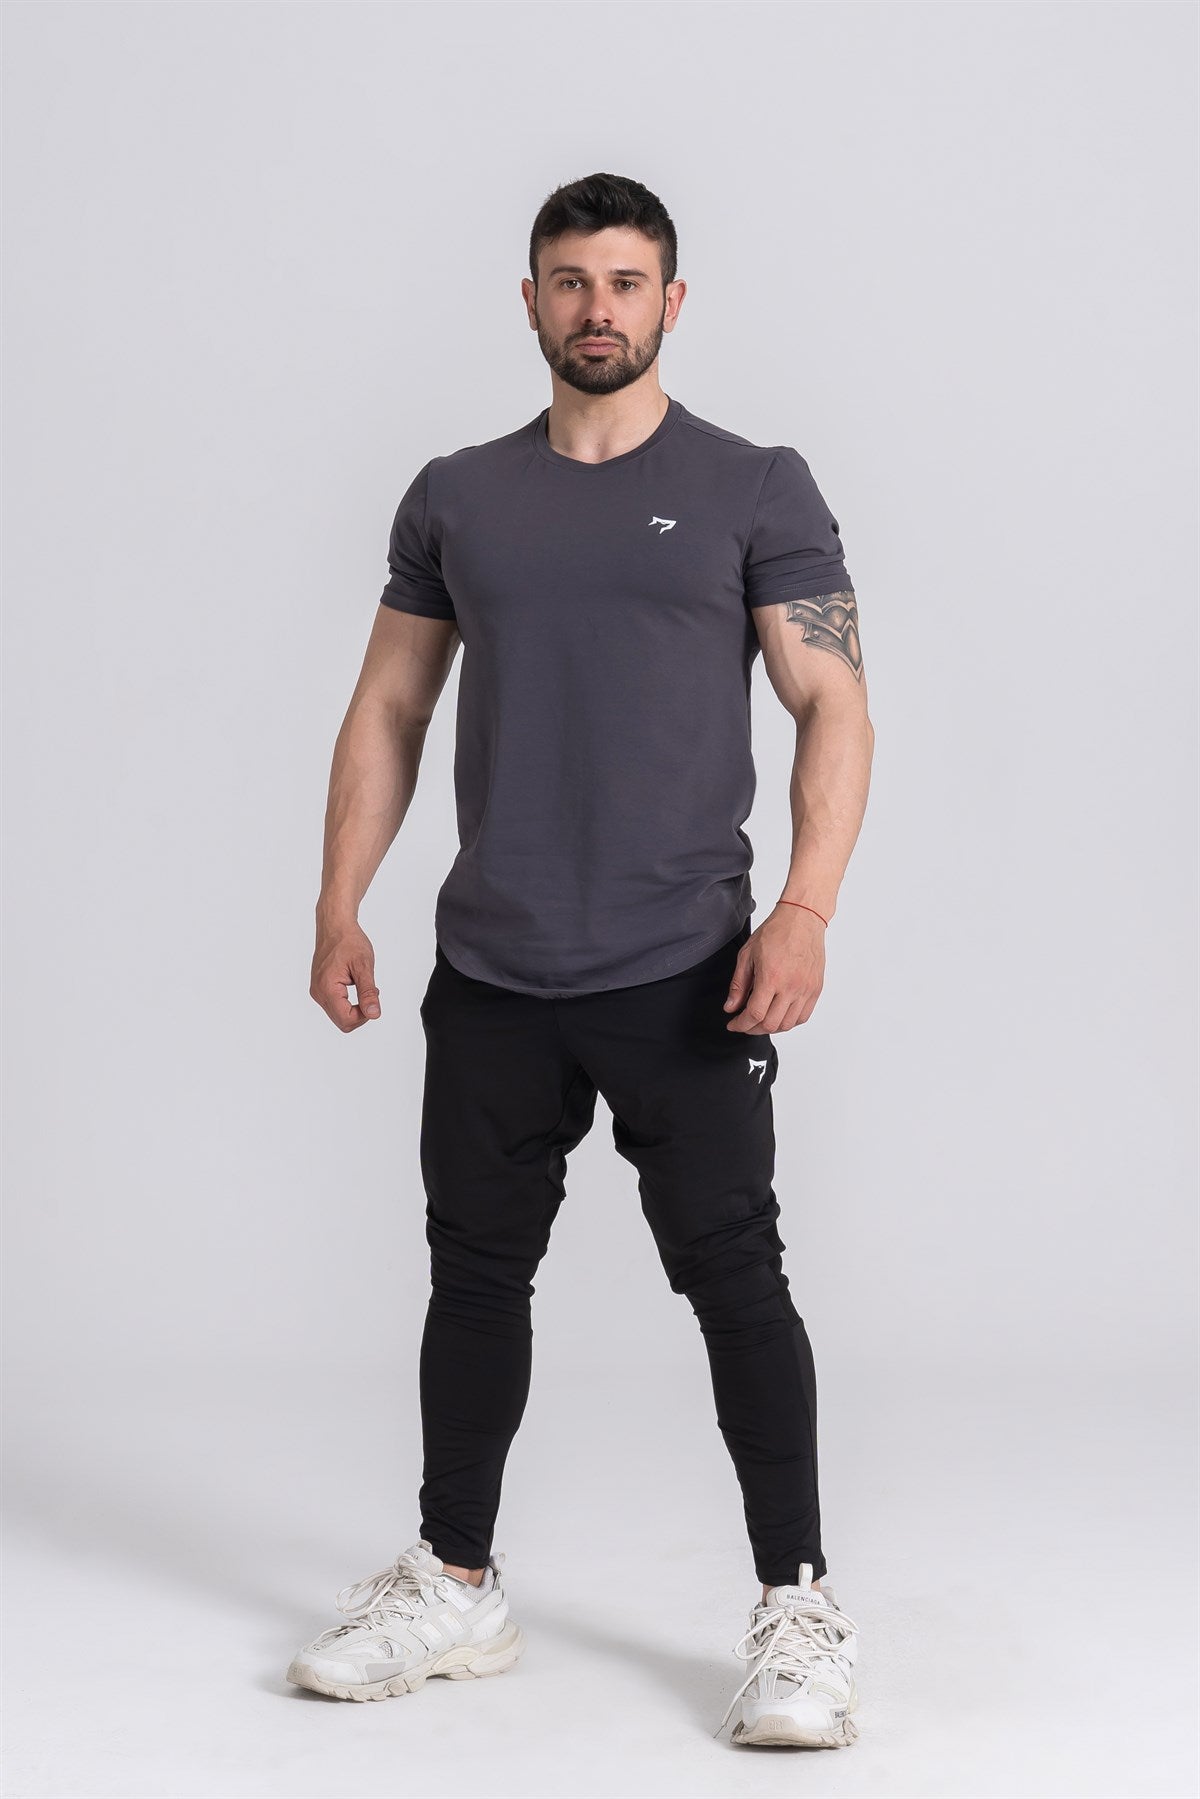 Gymwolves Man Sport T-Shirt | Smoked | Workout Tanktop |